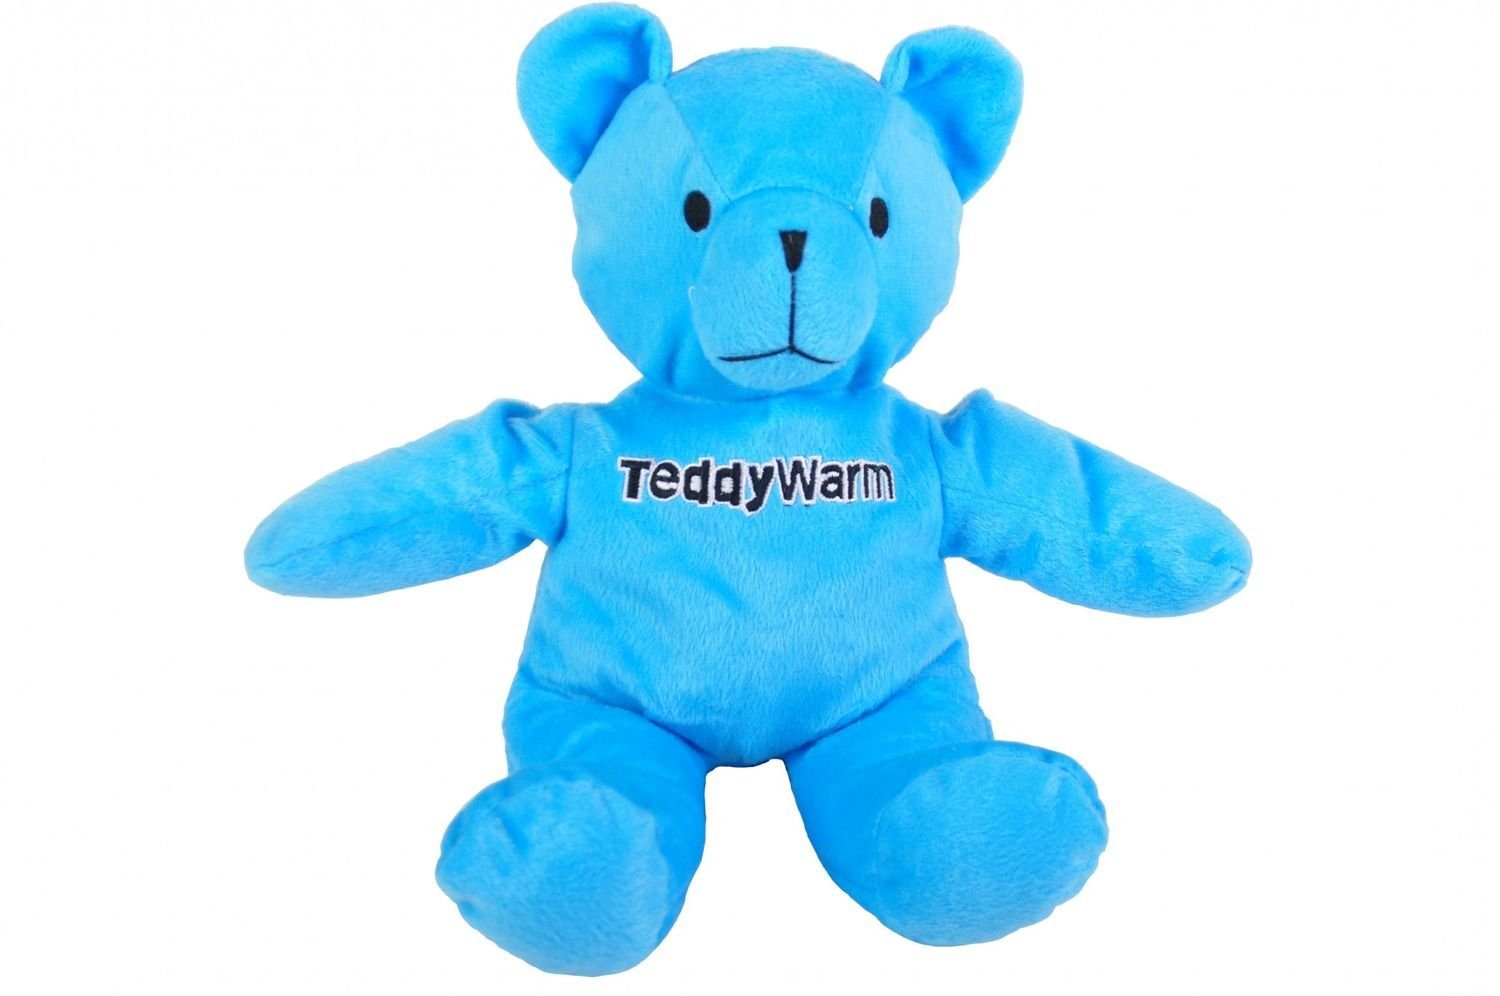 BURI Wärmegürtel TeddyWarm Bärchen Wärmeteddy Körnerkissen Wärmekissen Wärmflasche